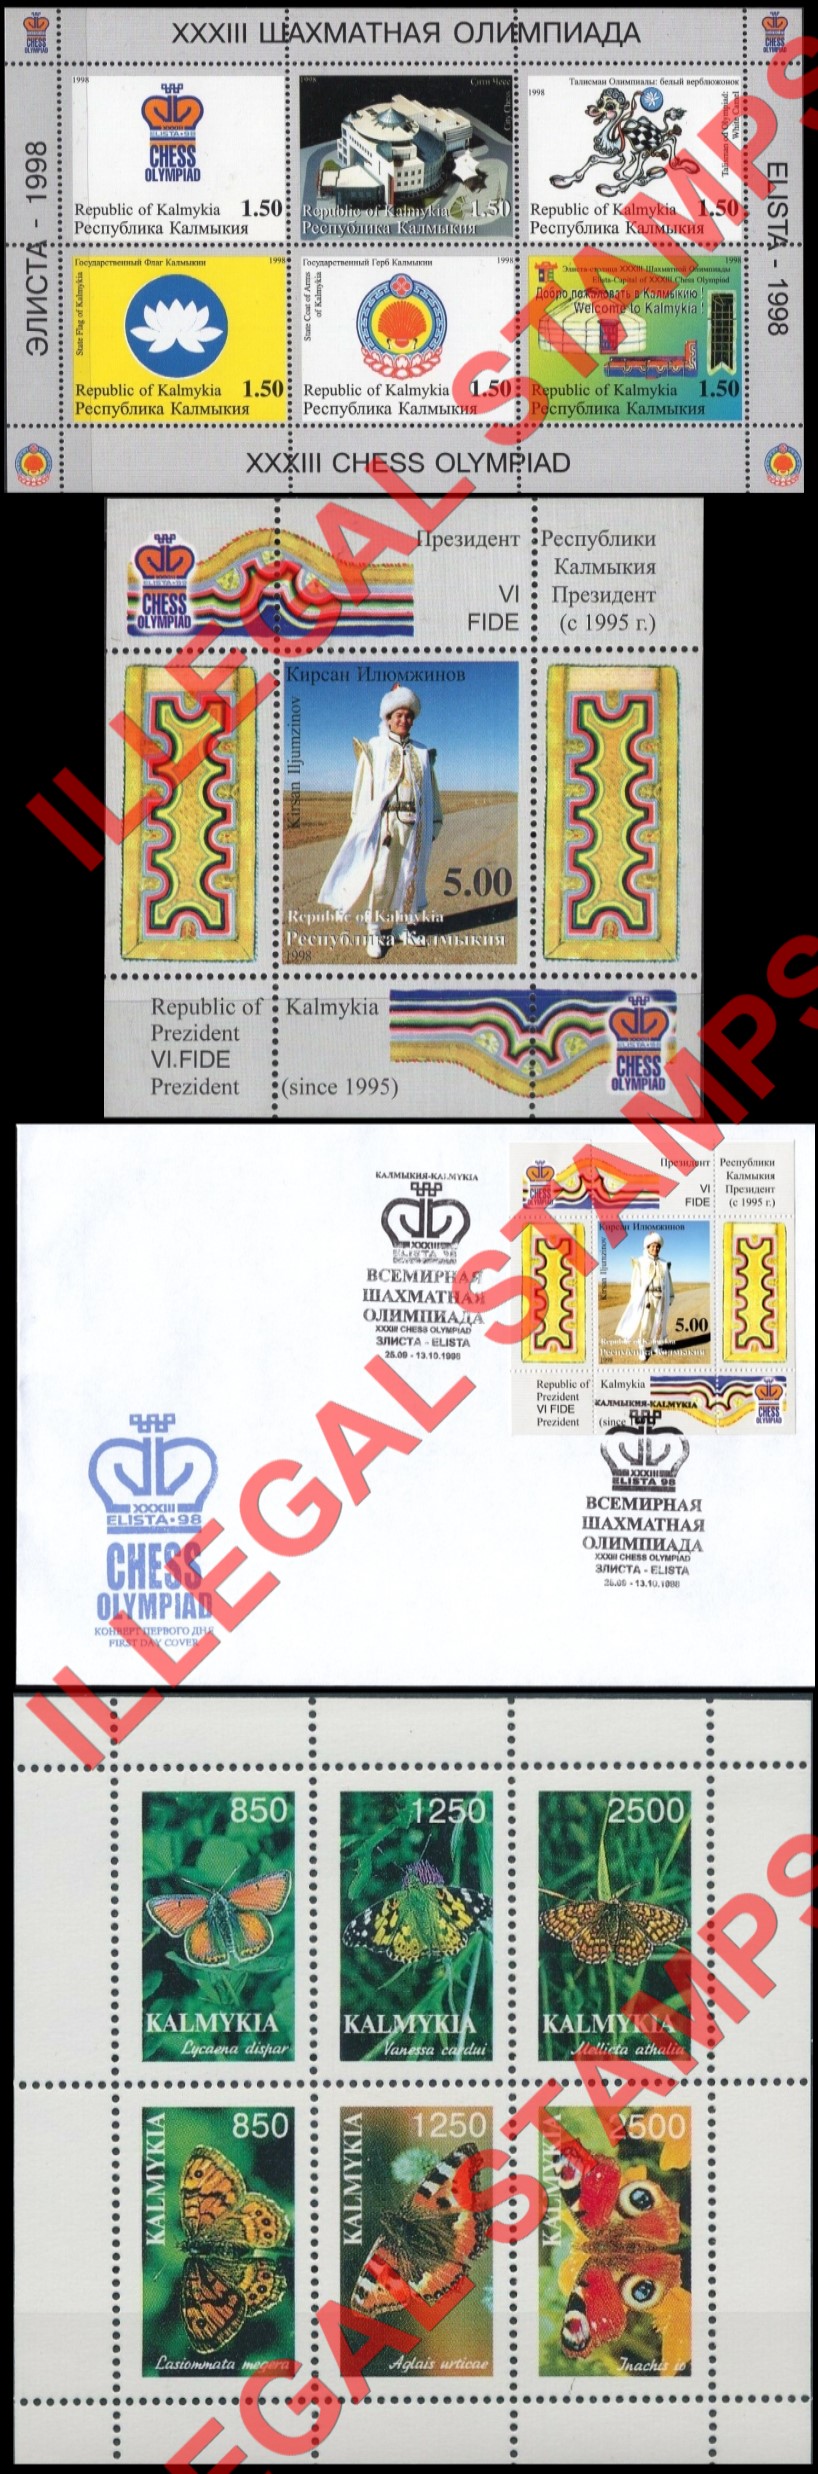 Republic of Kalmykia 1998 Illegal Stamps (Part 2)